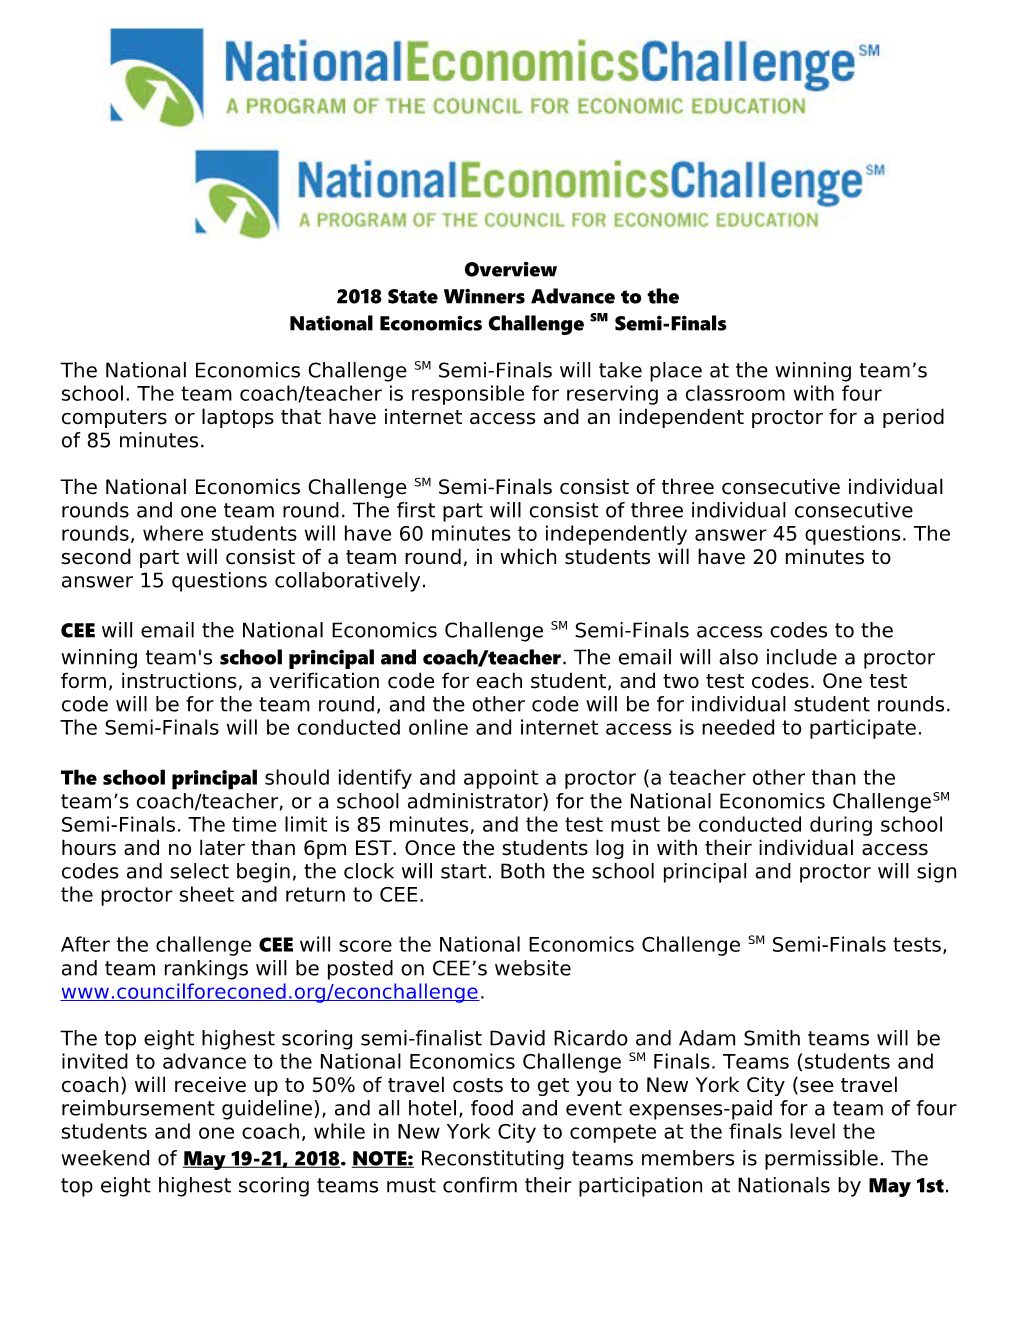 2003 NCEE/Goldman Sachs Foundation National Economics Challenge